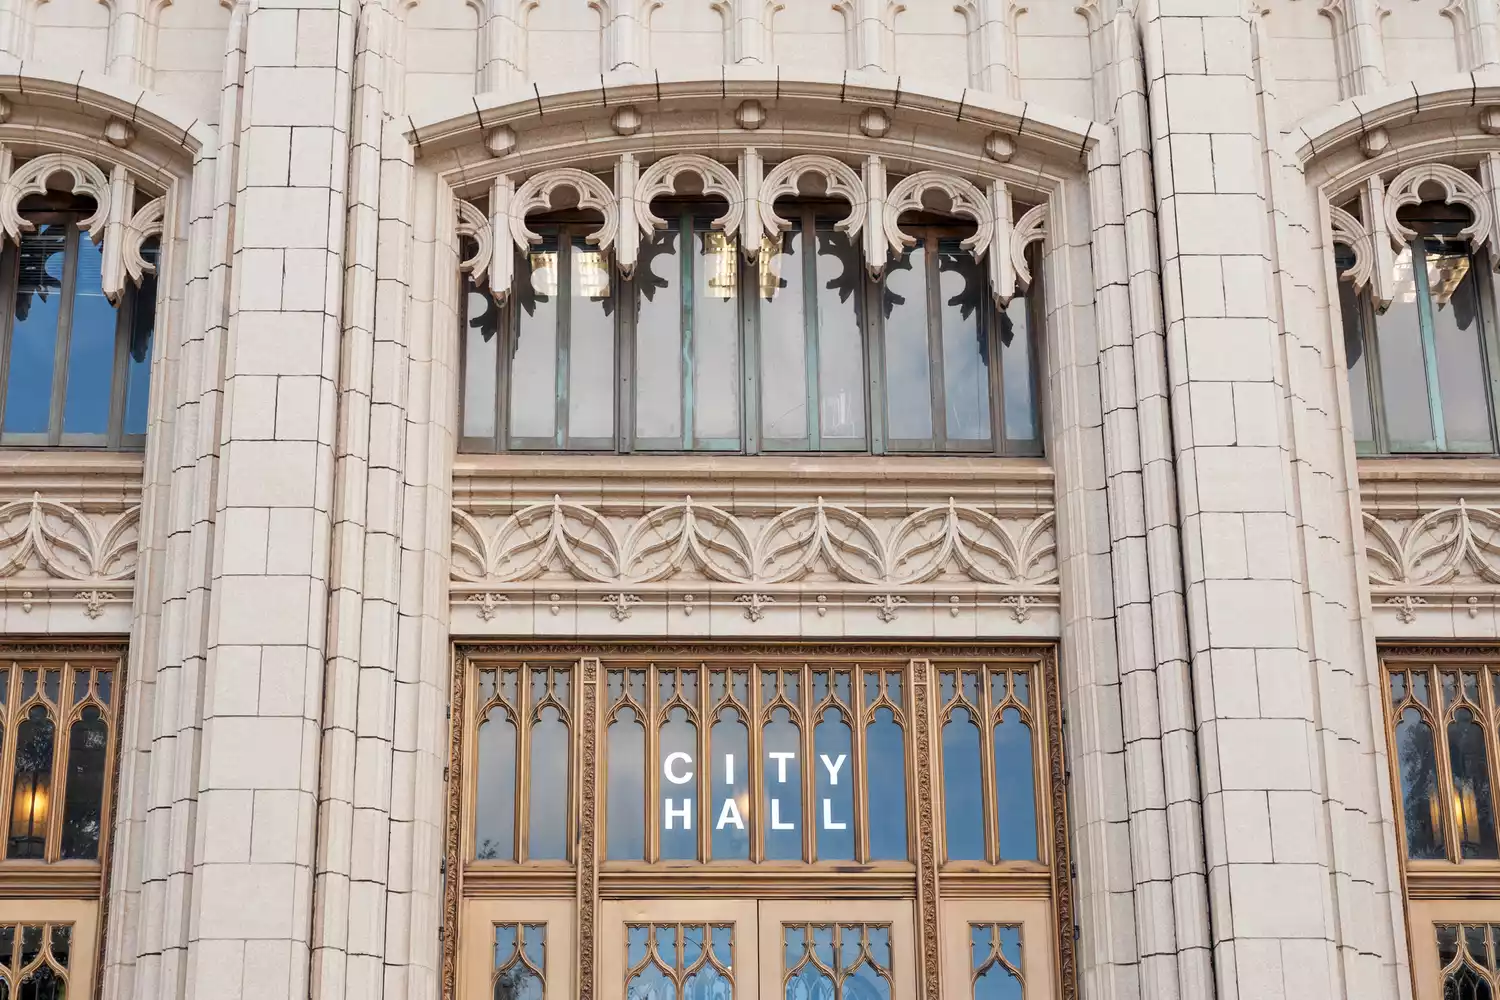 The exterior framework at Atlanta City Hall.